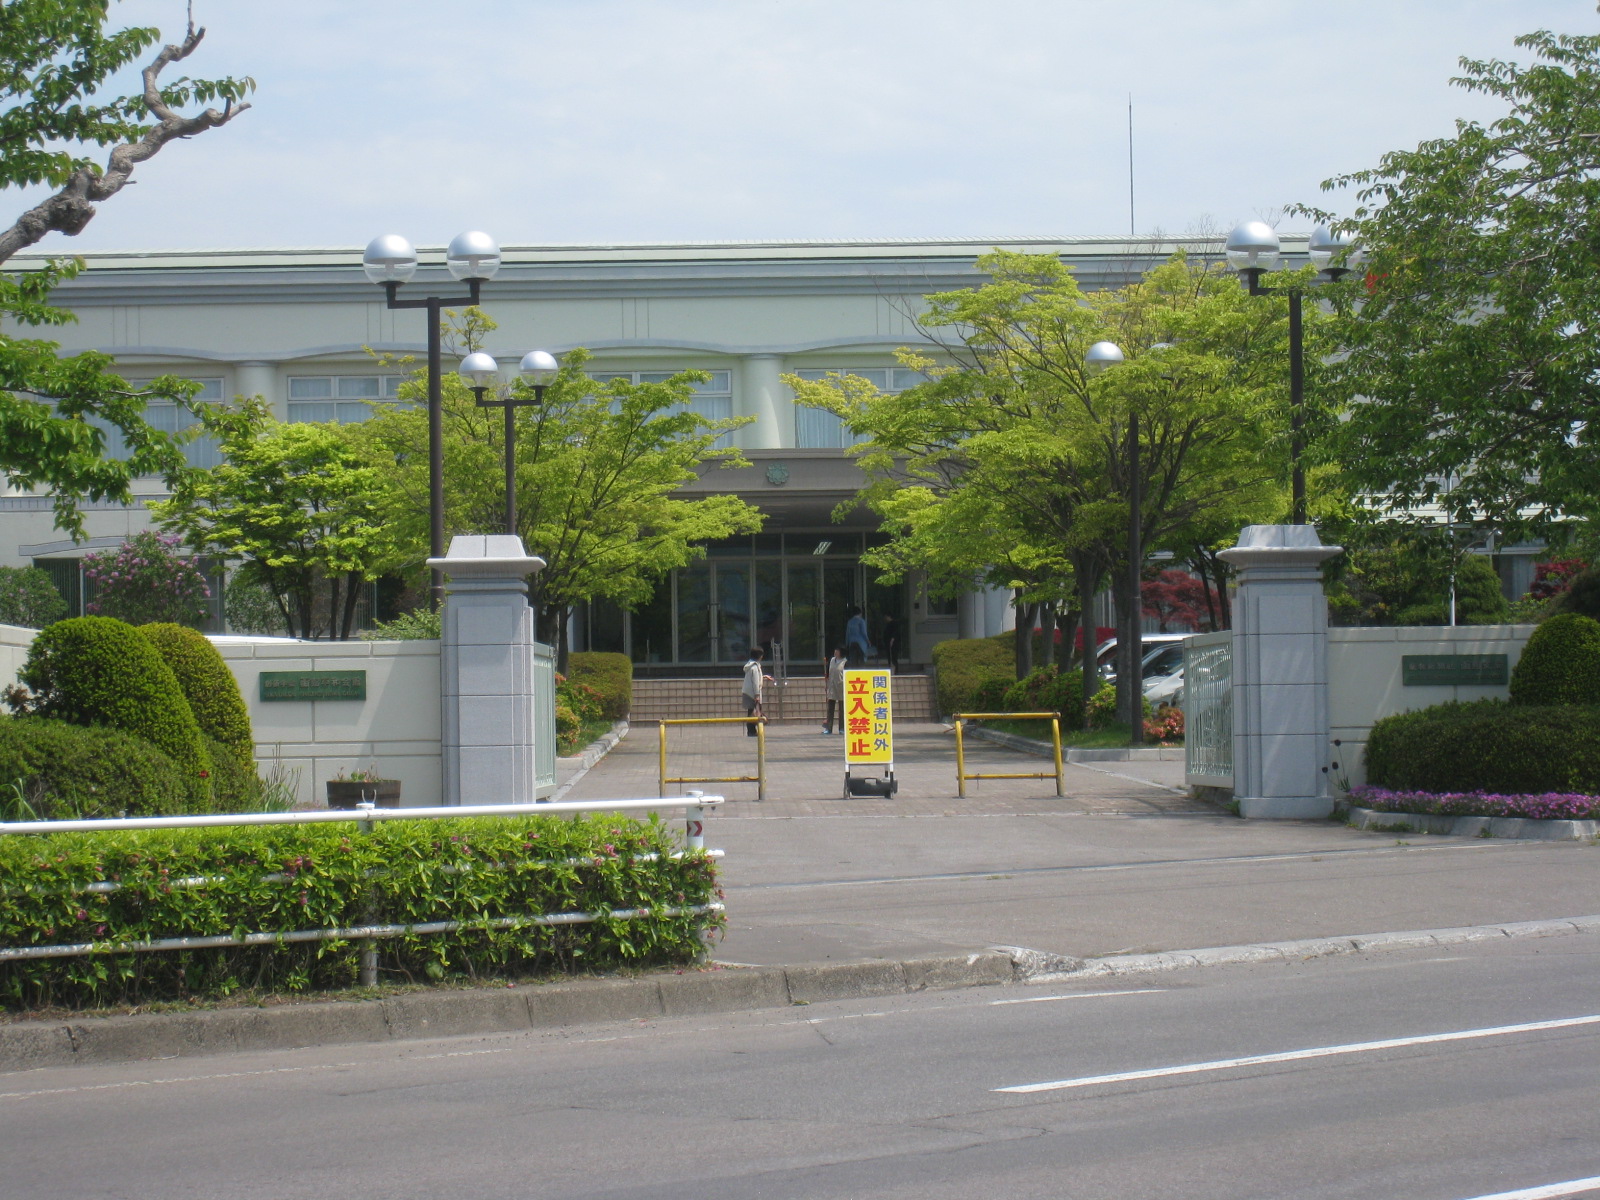 Primary school. 388m to Hakodate Municipal Chiyo Quai 岱小 school (elementary school)